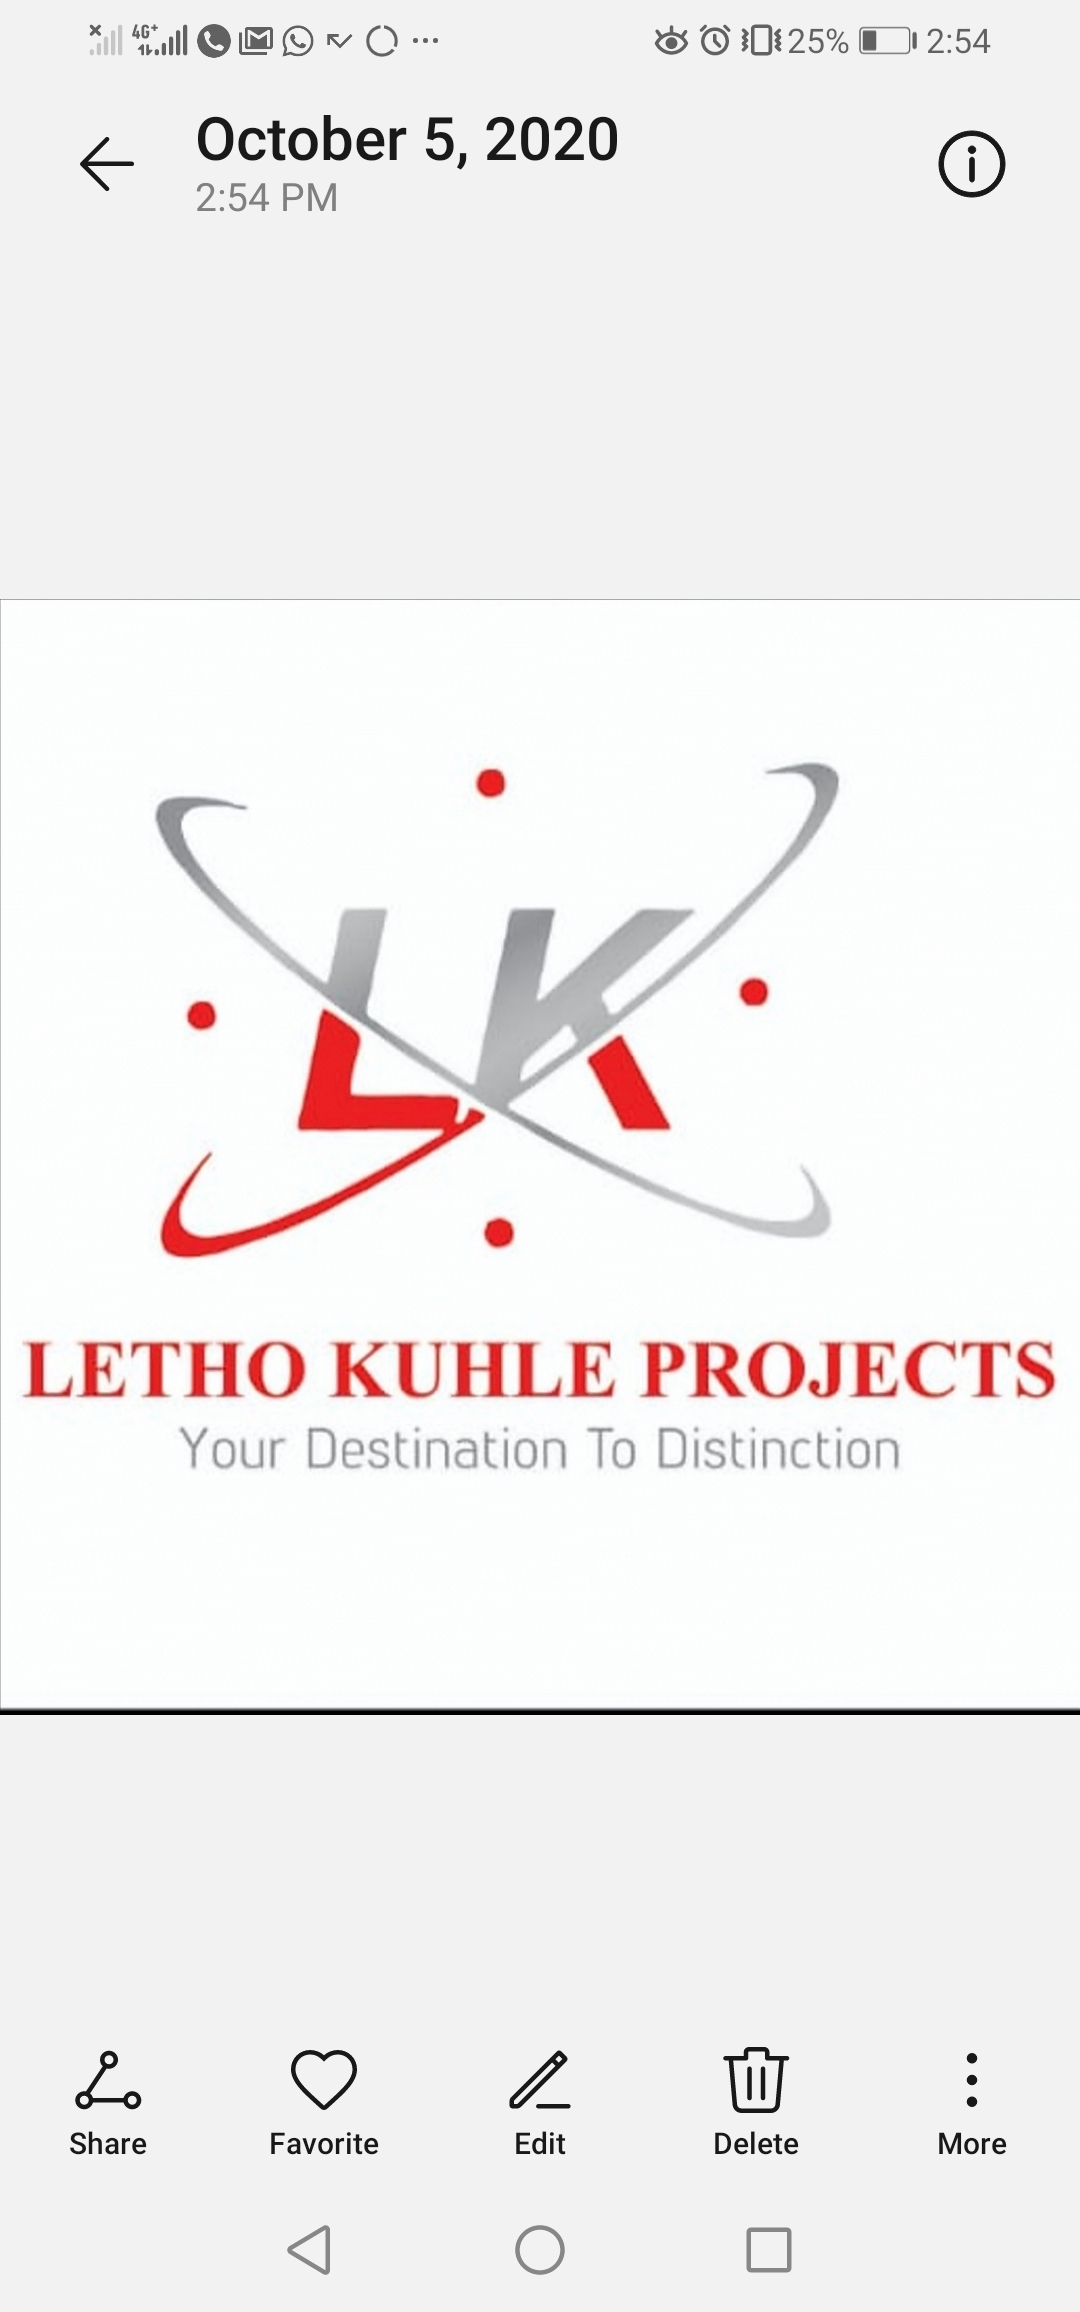 Letho-Kuhle Projects